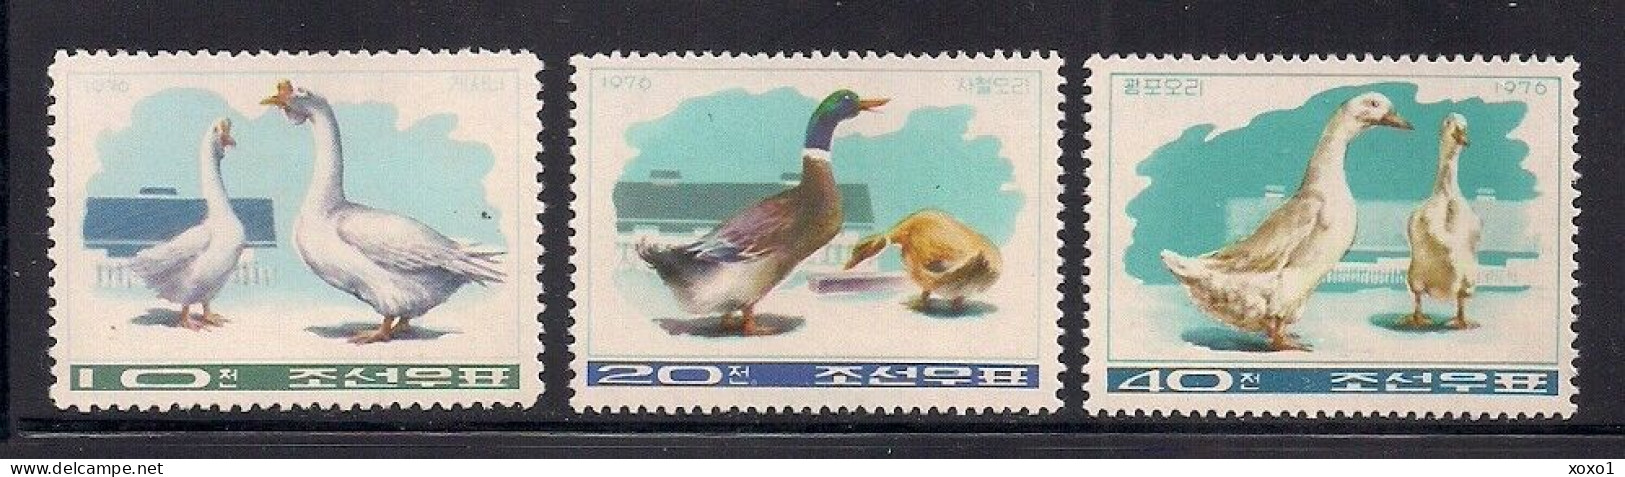 Korea, North 1976 MiNr. 1467 - 1469 Korea-Nord  Vögel Birds Farm  3v  MNH ** 7.00 € - Oies